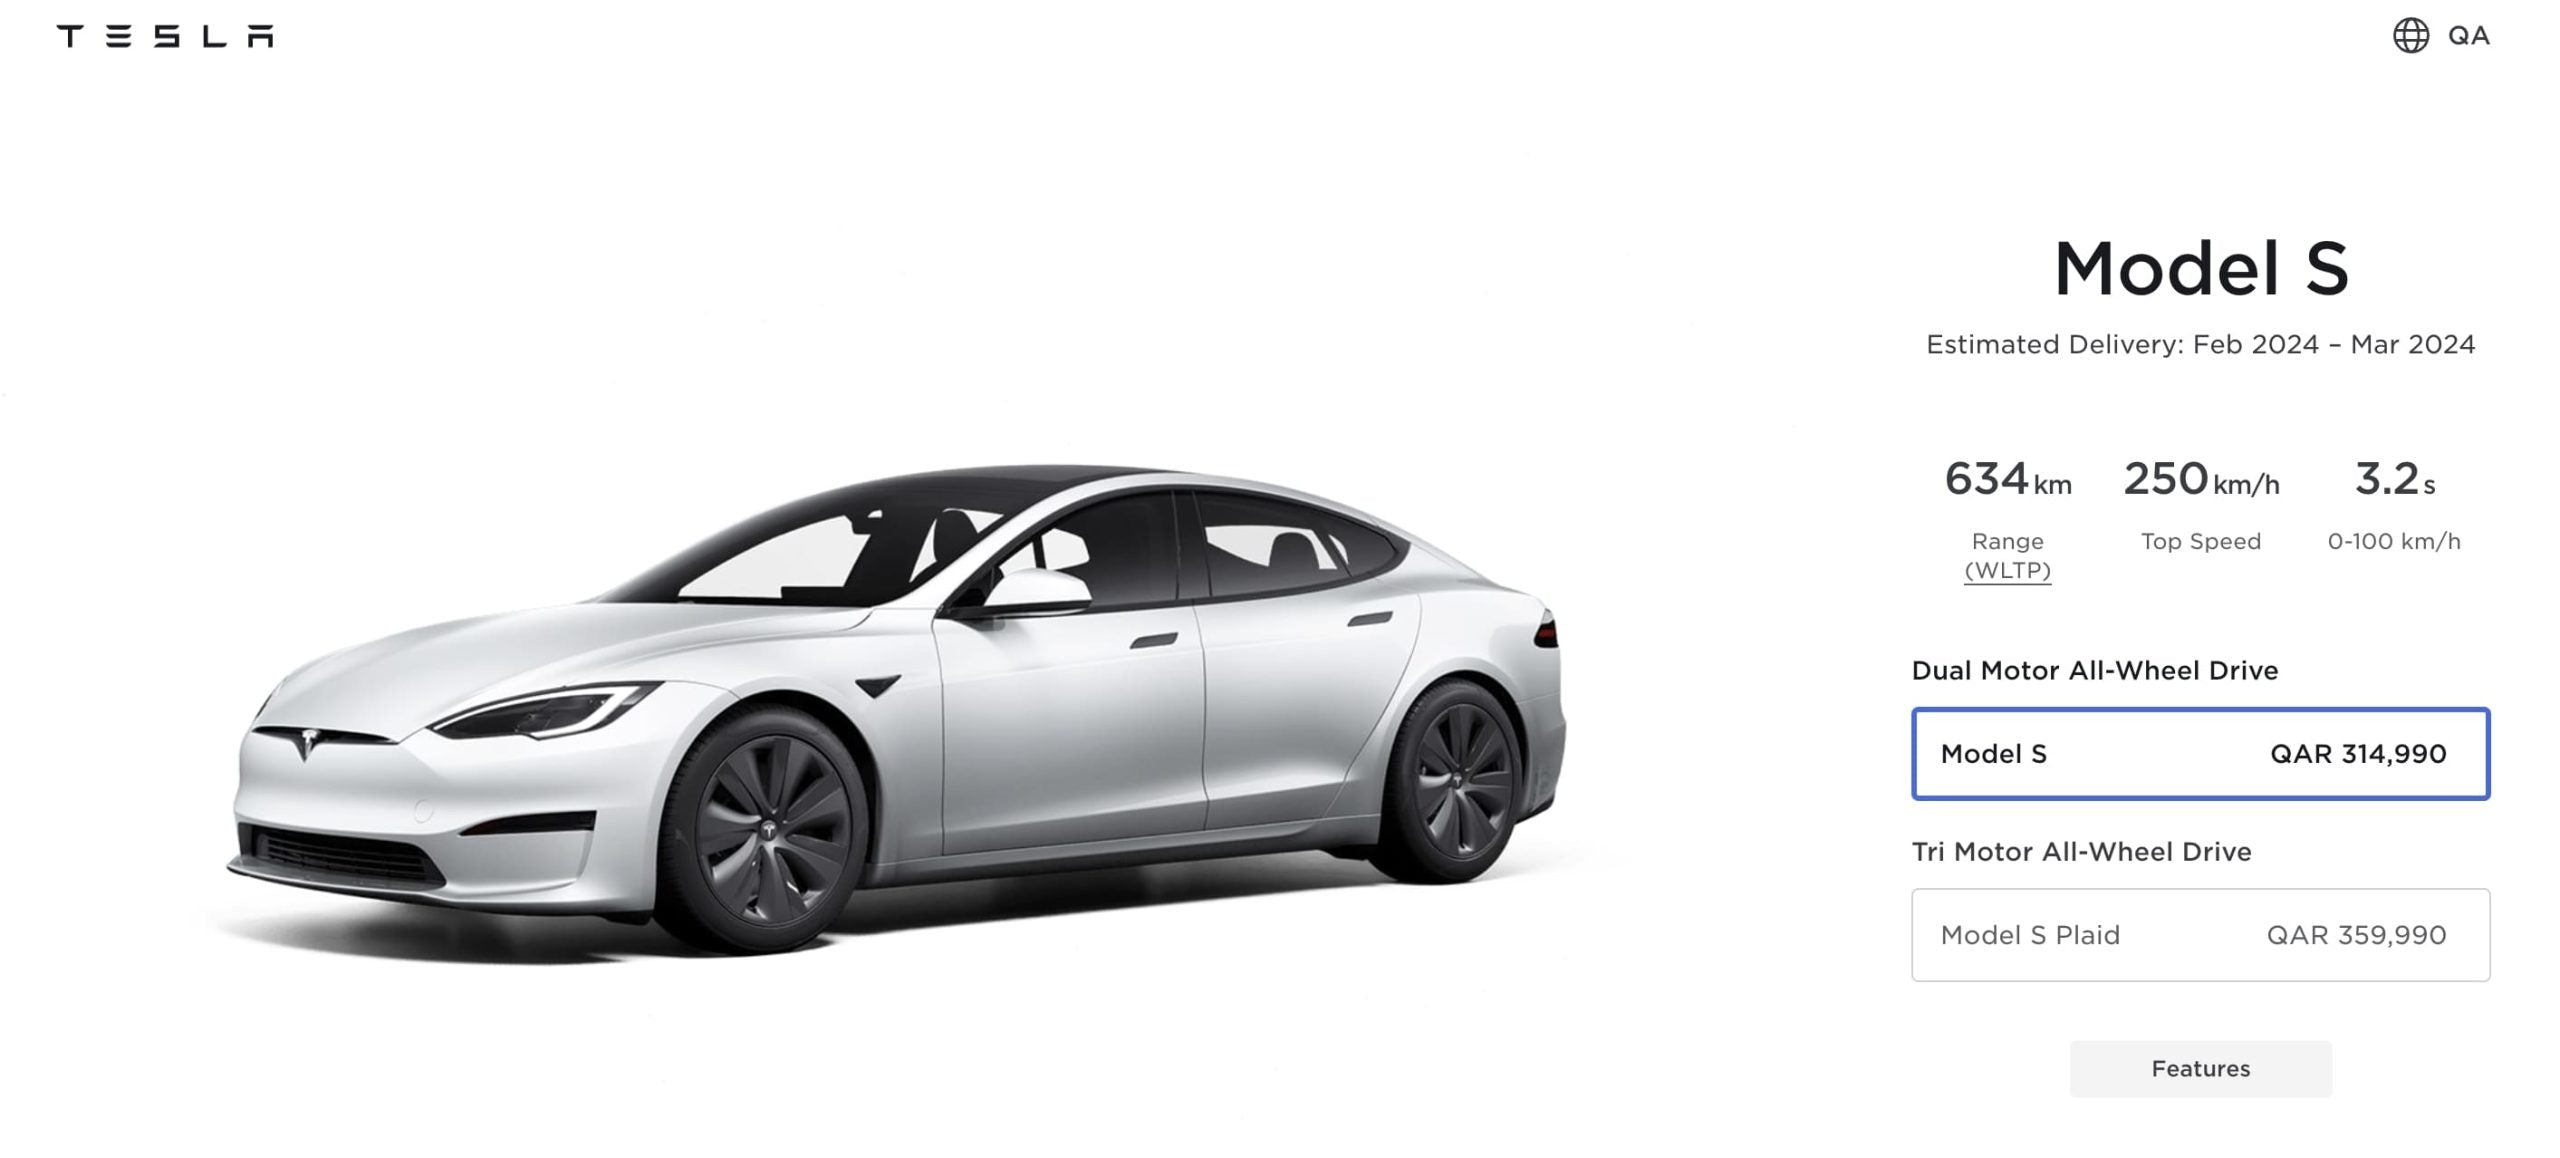 Tesla Model S Configurator Qatar Scaled